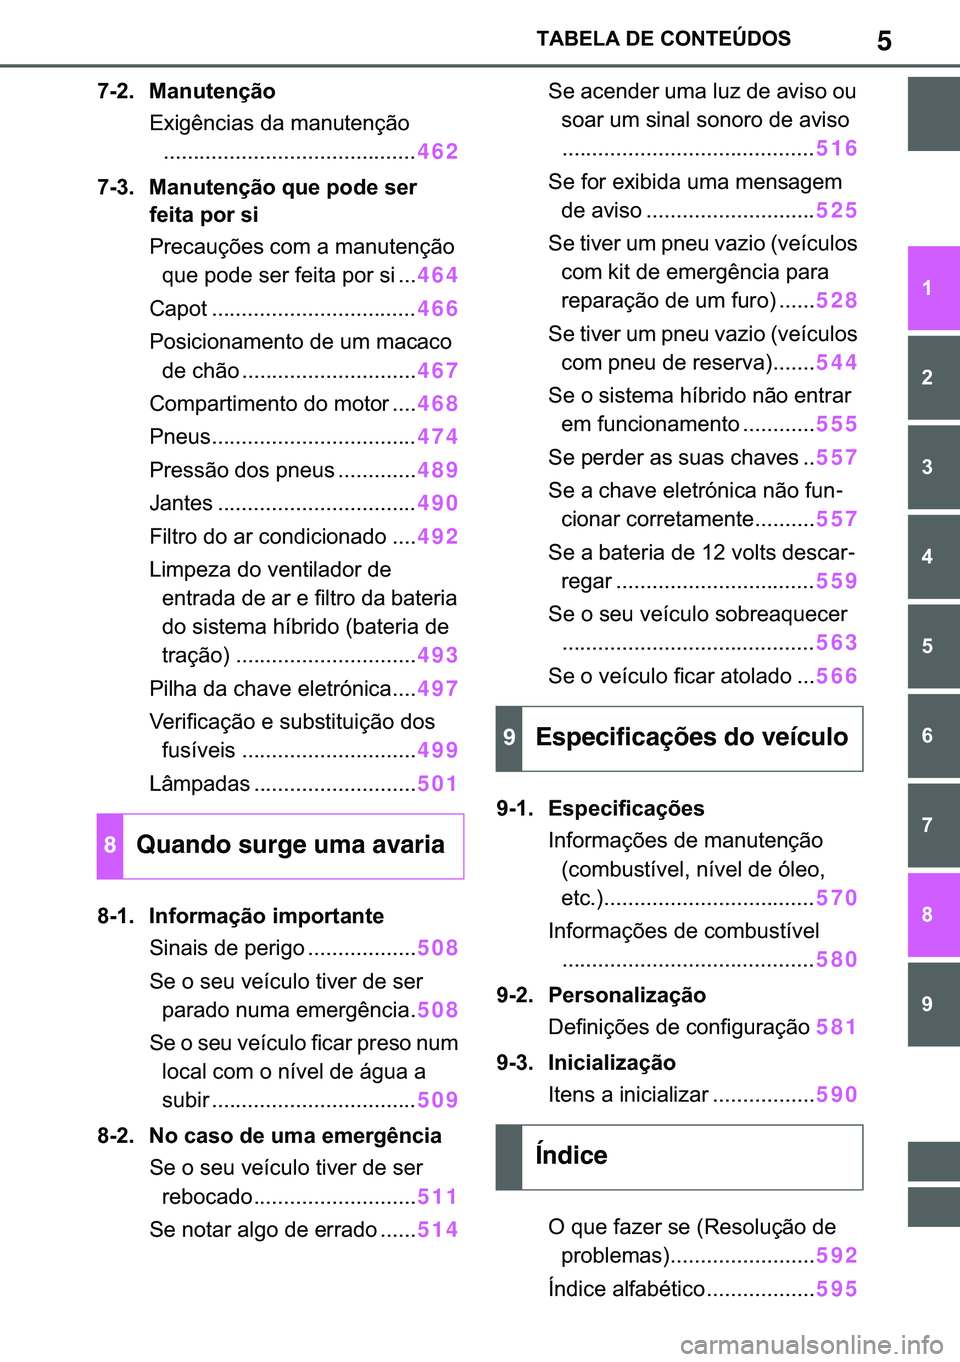 TOYOTA COROLLA 2021  Manual de utilização (in Portuguese) 5
�&�2�5�2�/�/�$ �+�9 �7�0�0�7 �(�(
�7�$�%�(�/�$���(��&�2�1�7�(�Ò��2�6
�
� � � � �
� �
�
���� �0�D�Q�X�W�H�Q�o�m�R
�(�[�L�J�r�Q�F�L�D�V��G�D��P�D�Q�X�W�H�Q�o�m�R
���������